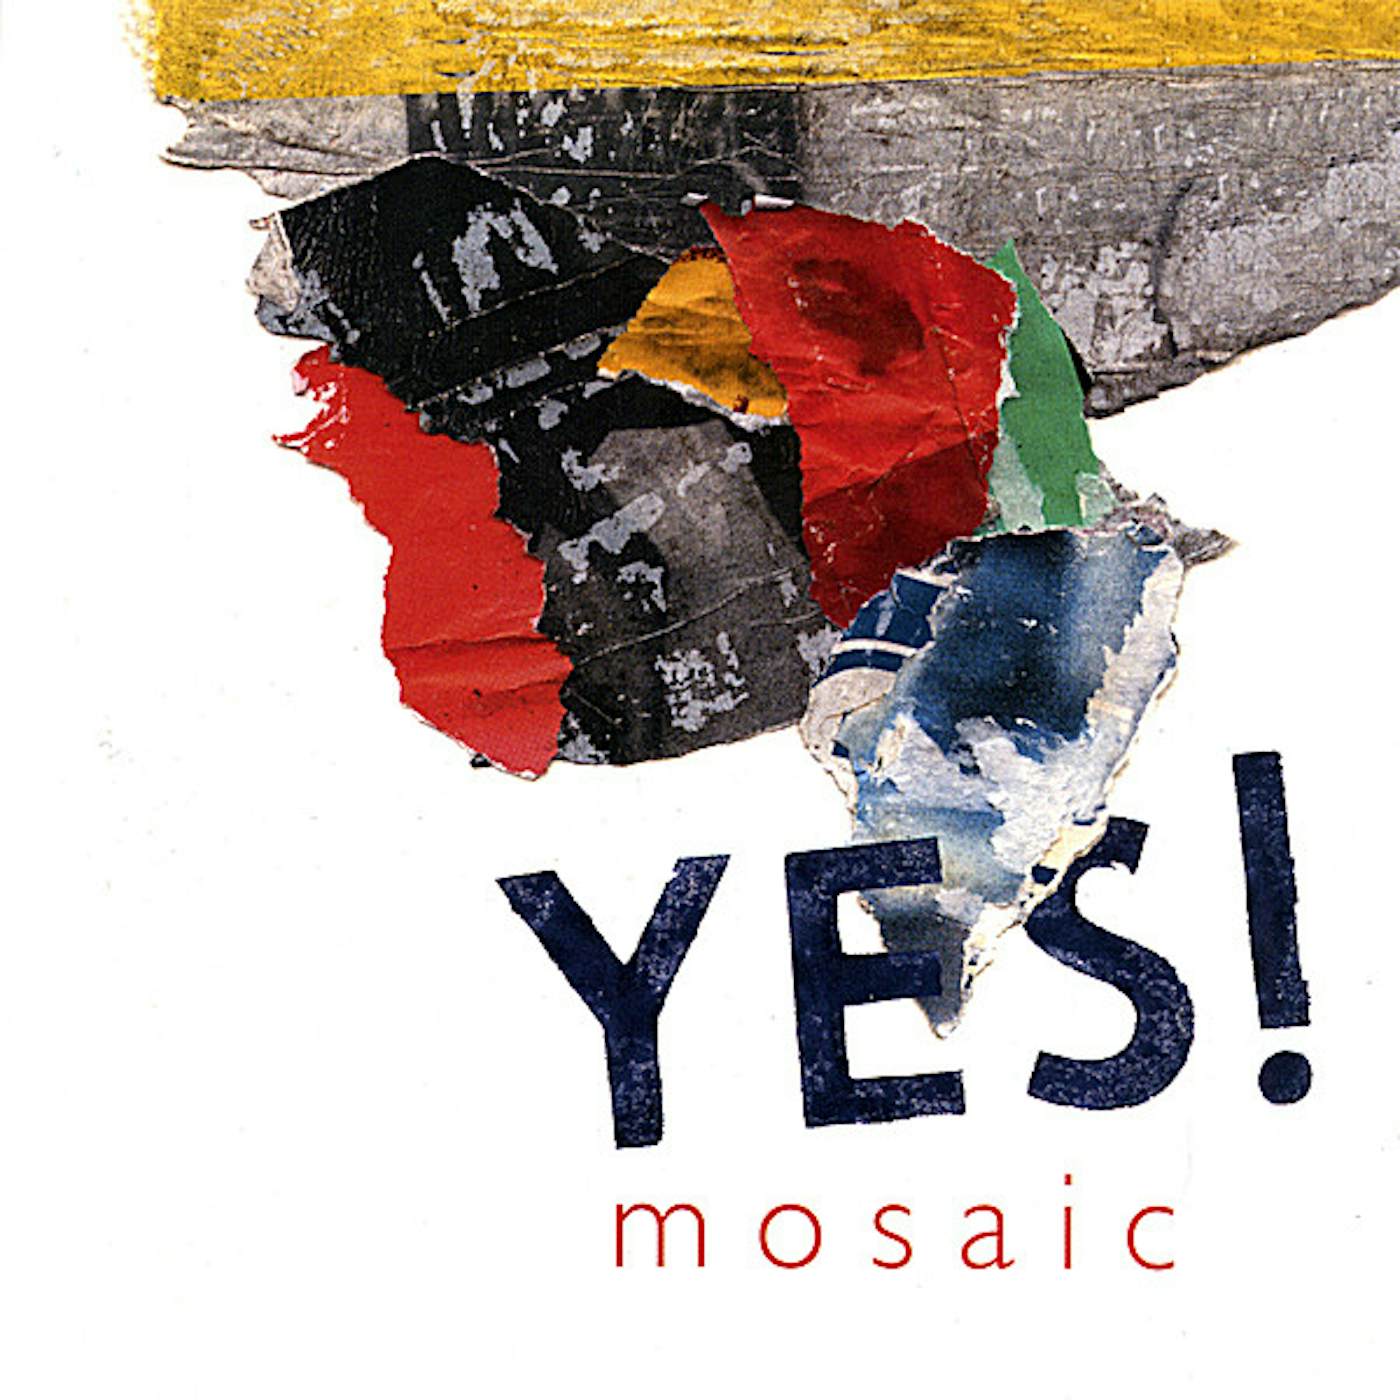 Mosaic YES! CD